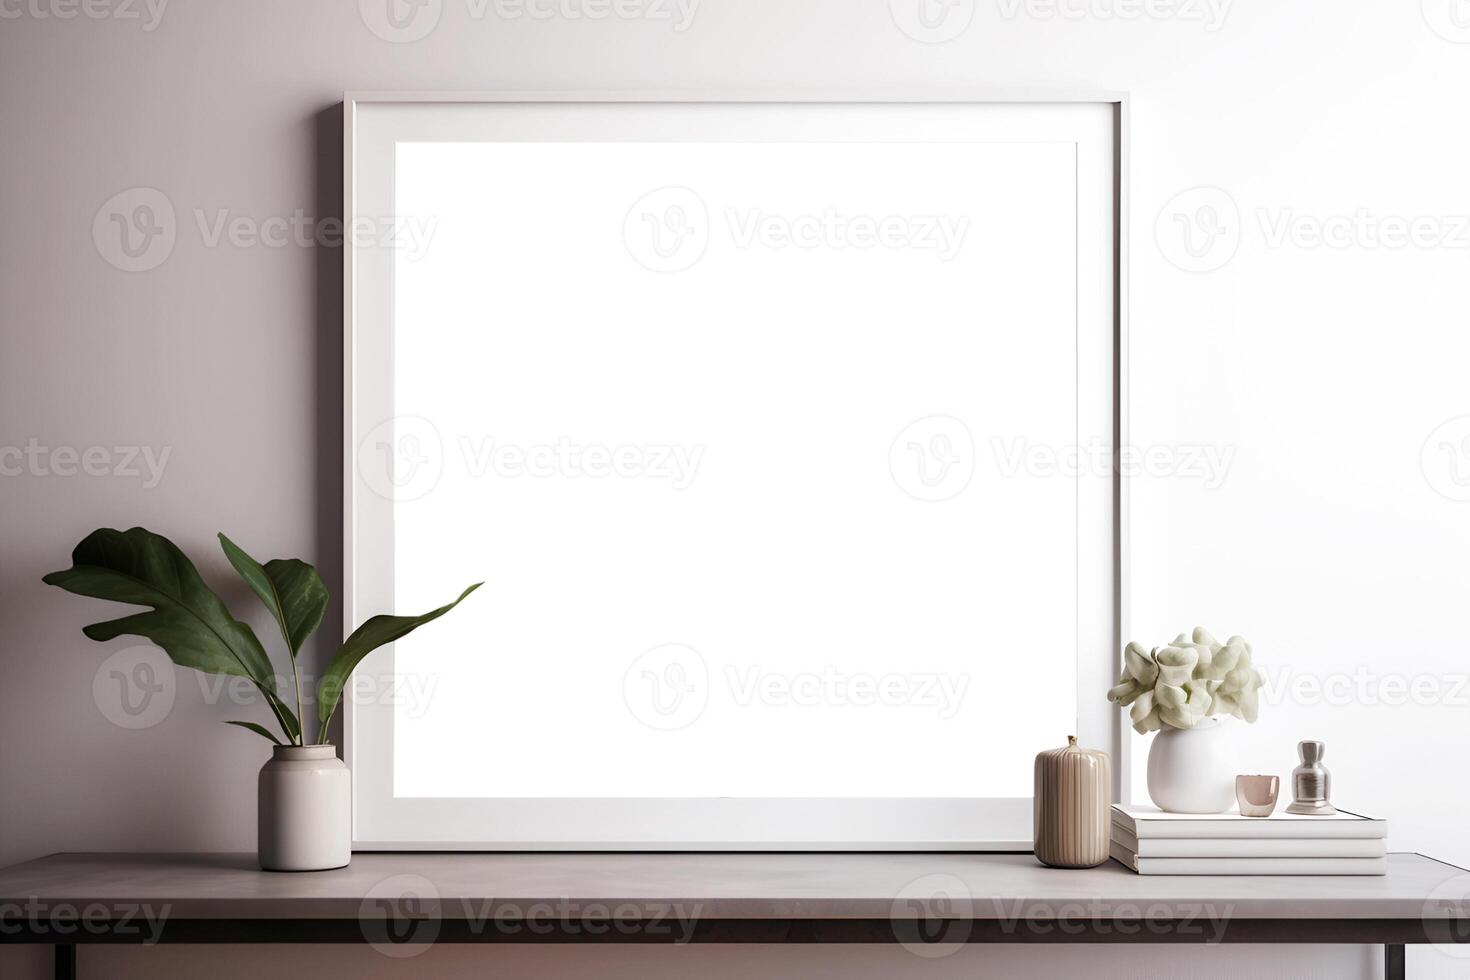 content, White empty frame mockup on white wall background. Minimalistic design, white vase and figurine next to it. photo